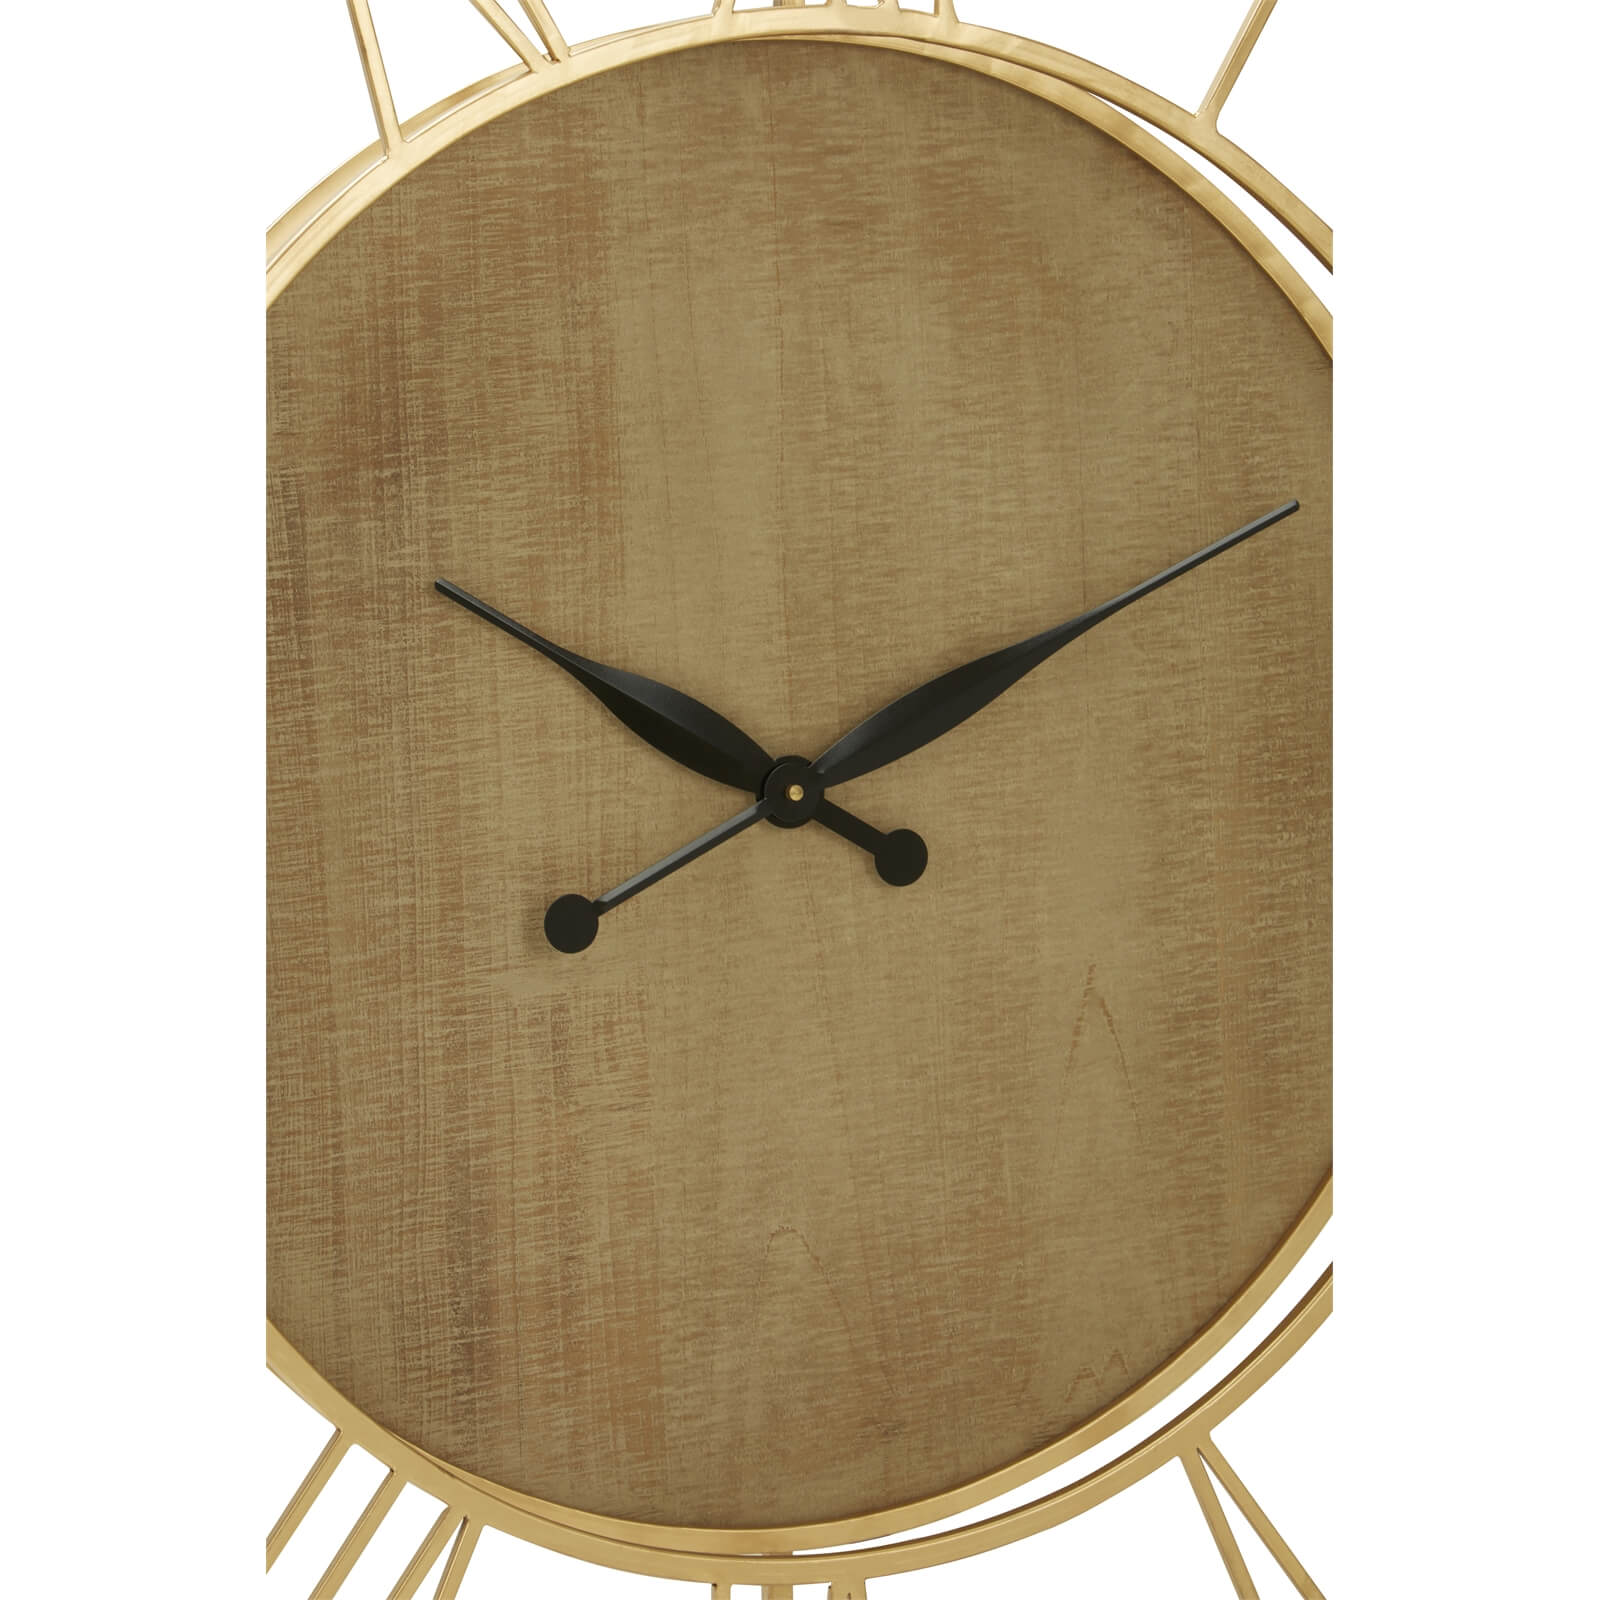 Yaxi Clock - Faux Gold Foil & Natural Wood